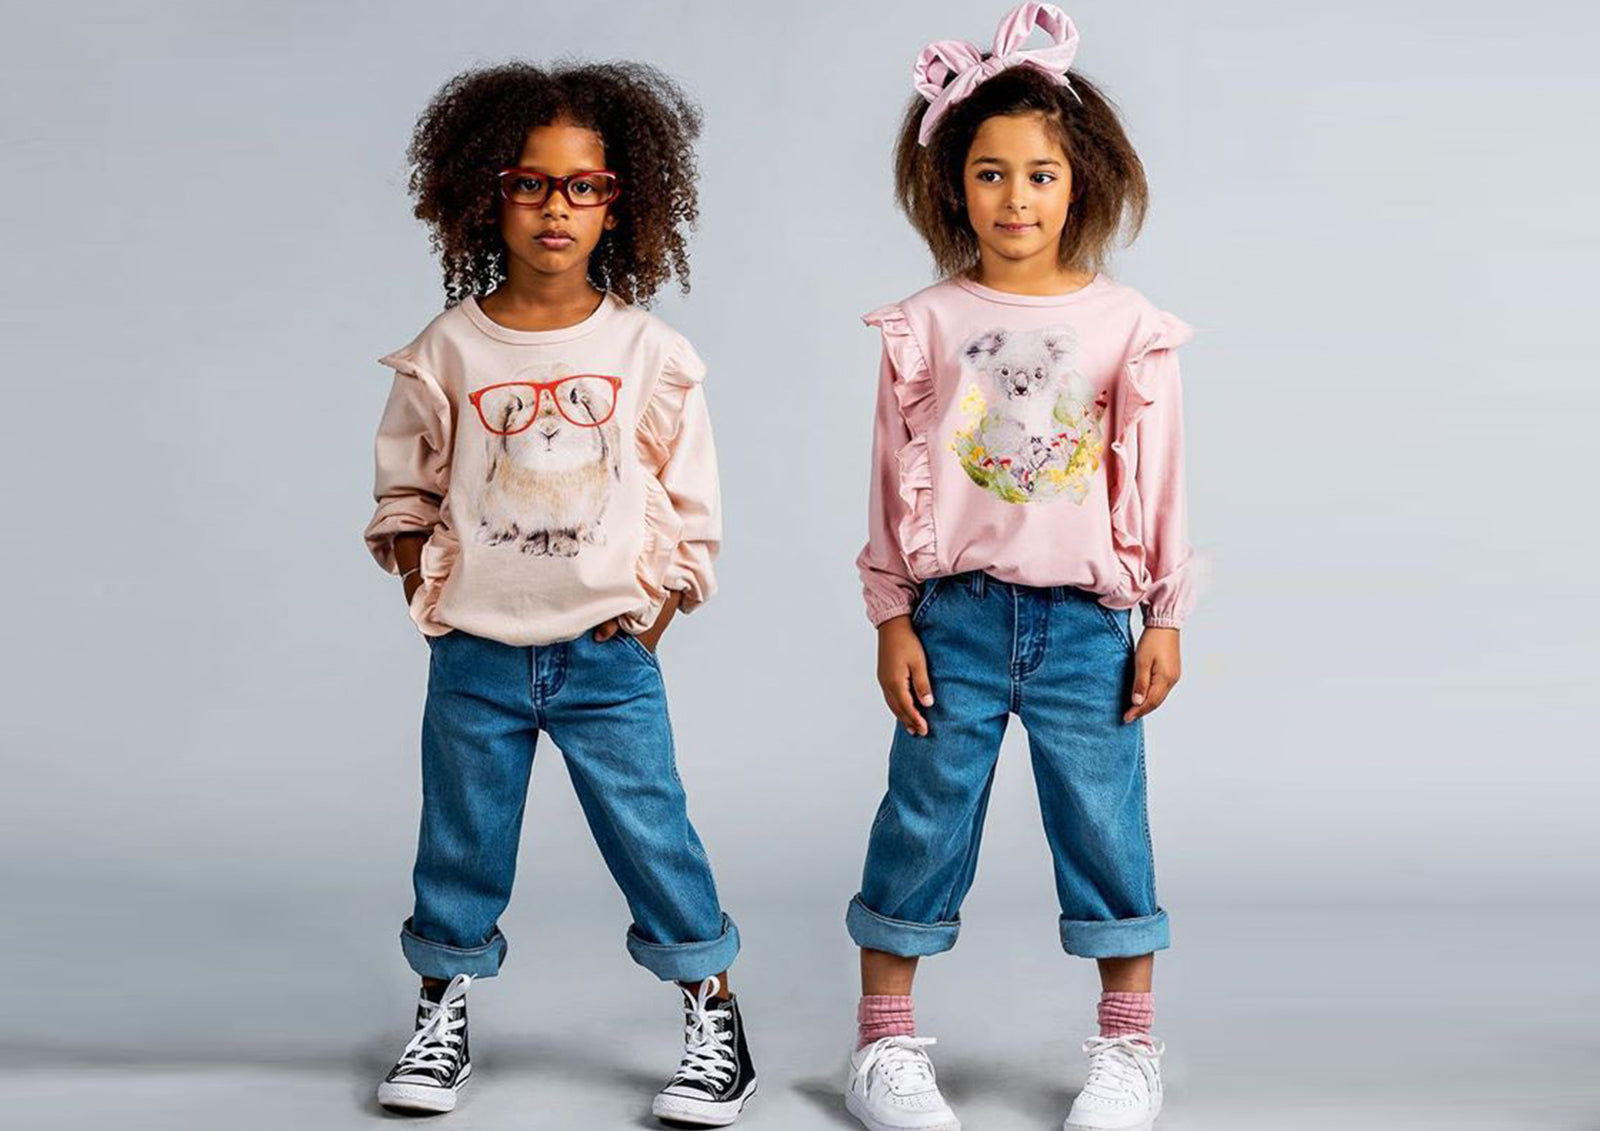 Rock Your Baby x Carmen Hui kids fashion range collaboration